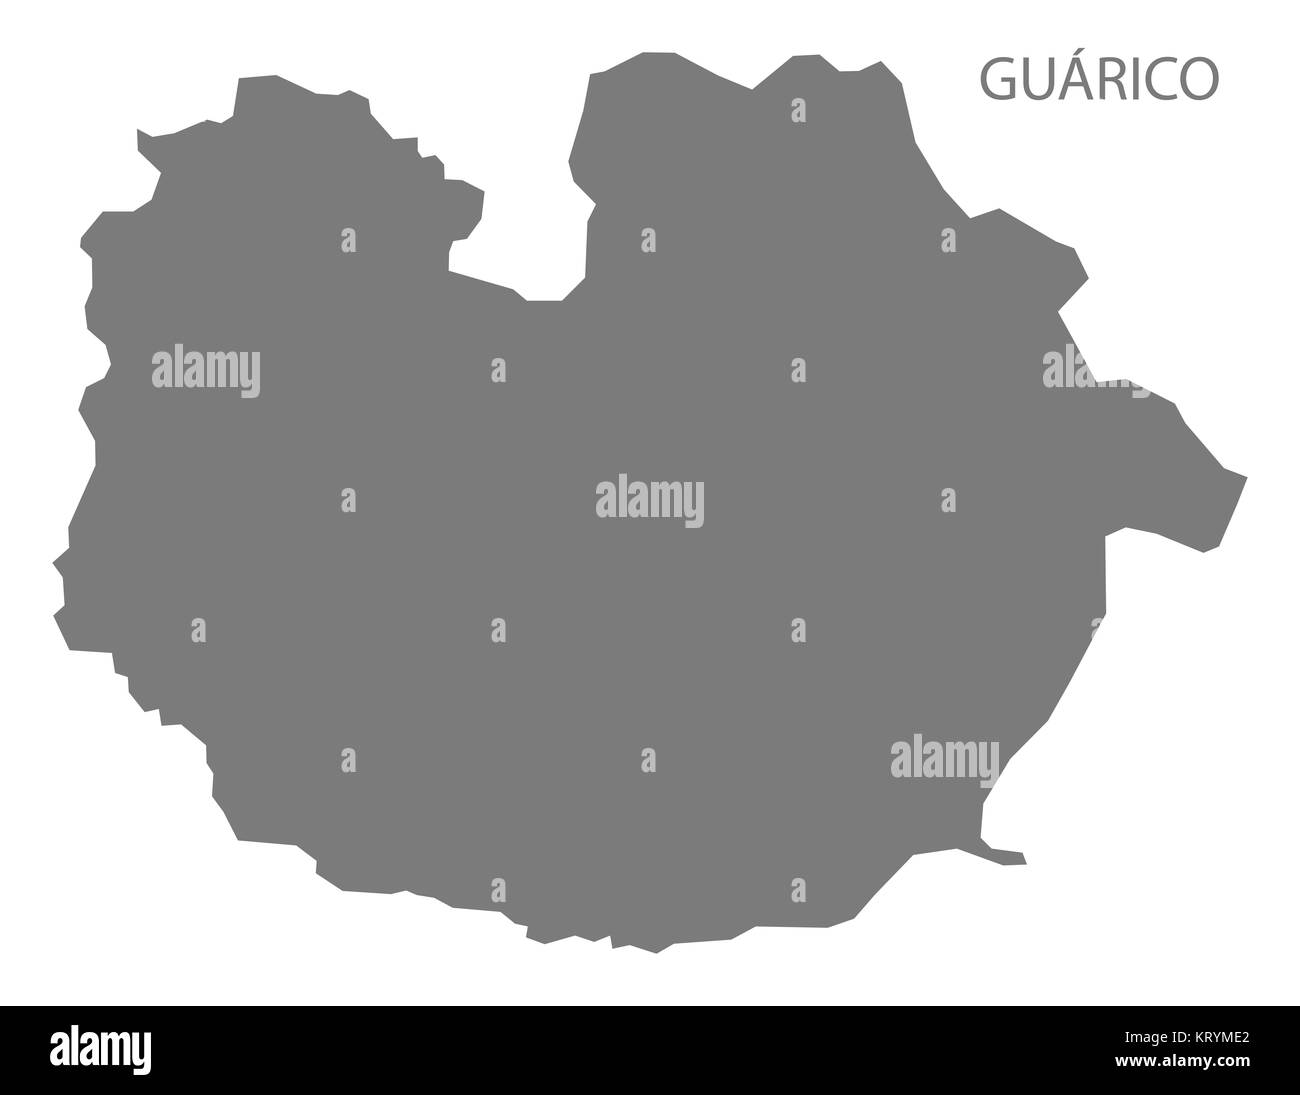 Guarico Venezuela Map grey Stock Photo